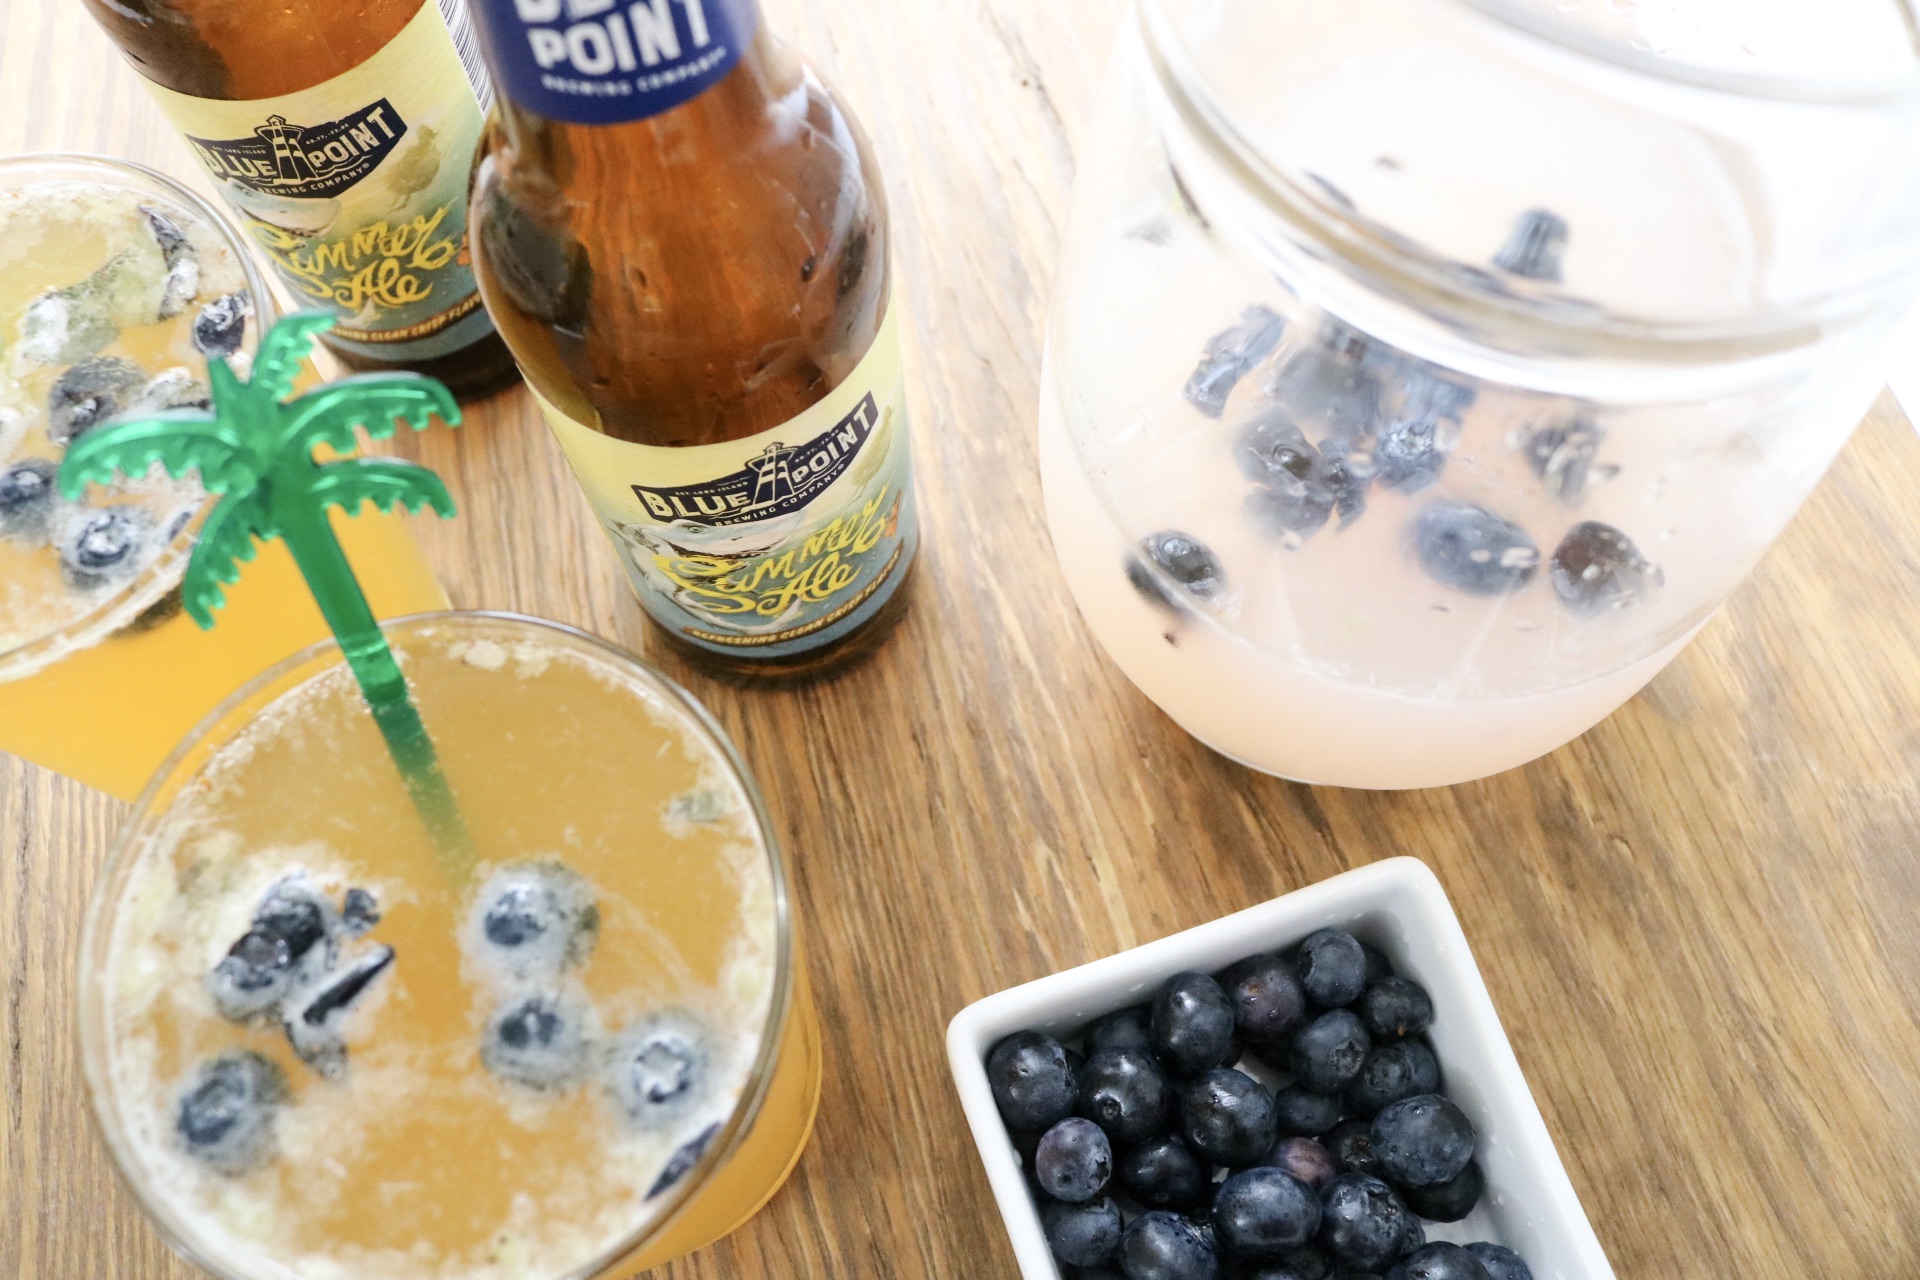 Blueberry Summer Shandy Beer Cocktail #beer #summerbeer #summerbbqs #summerale #blueberries #cocktailrecipes